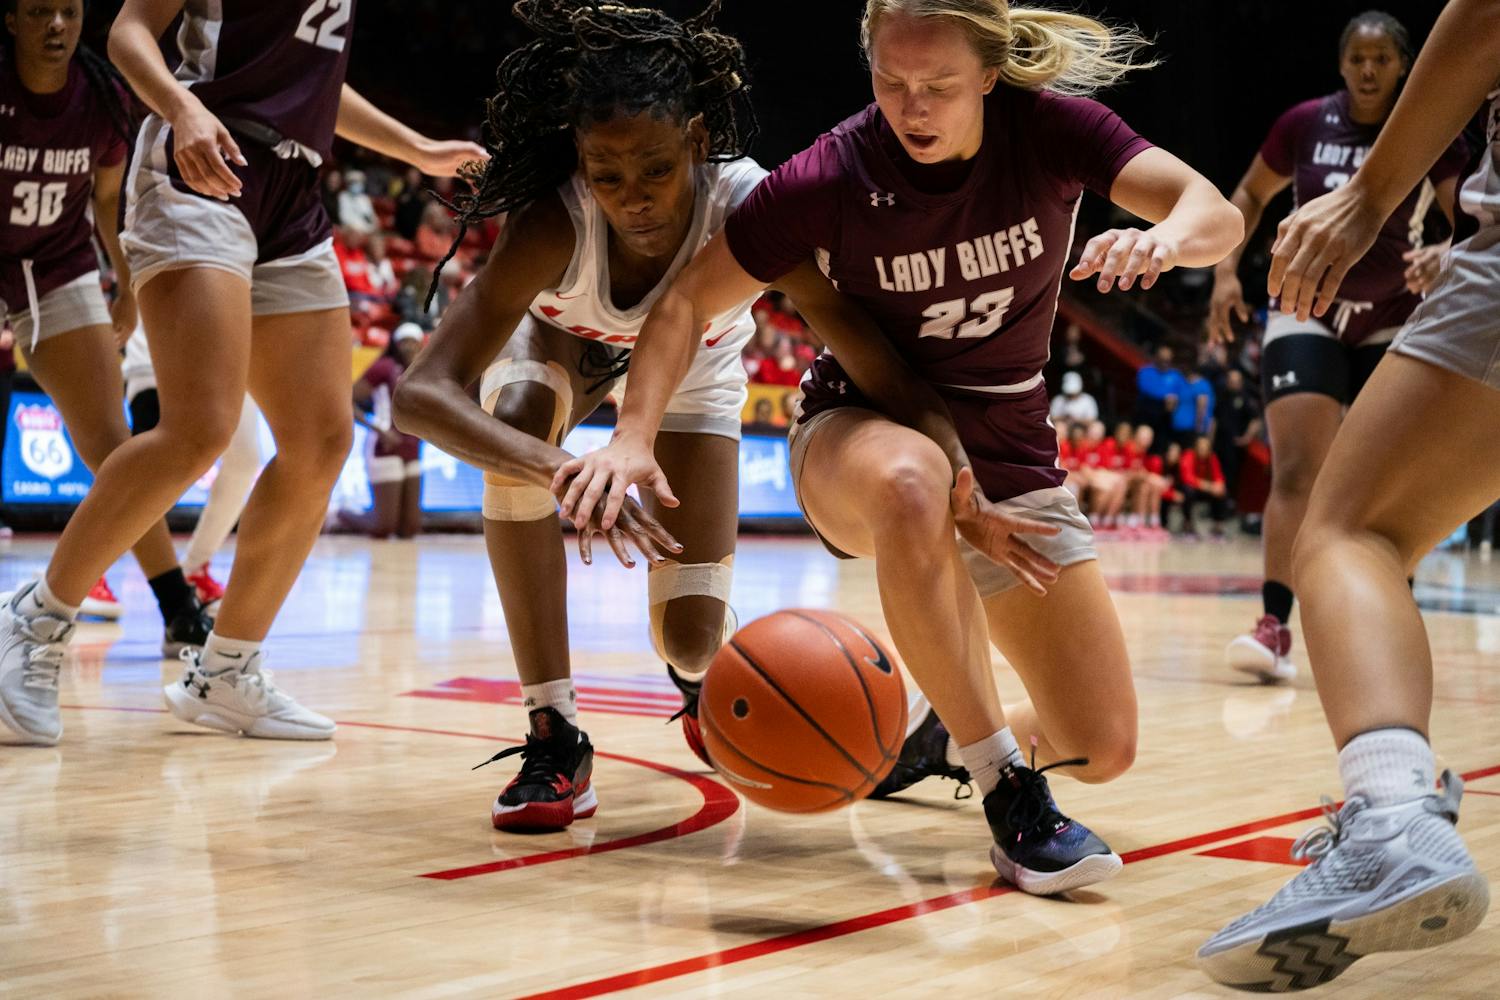 GALLERY: UNM Women's Basketball vs. West Texas A&M University